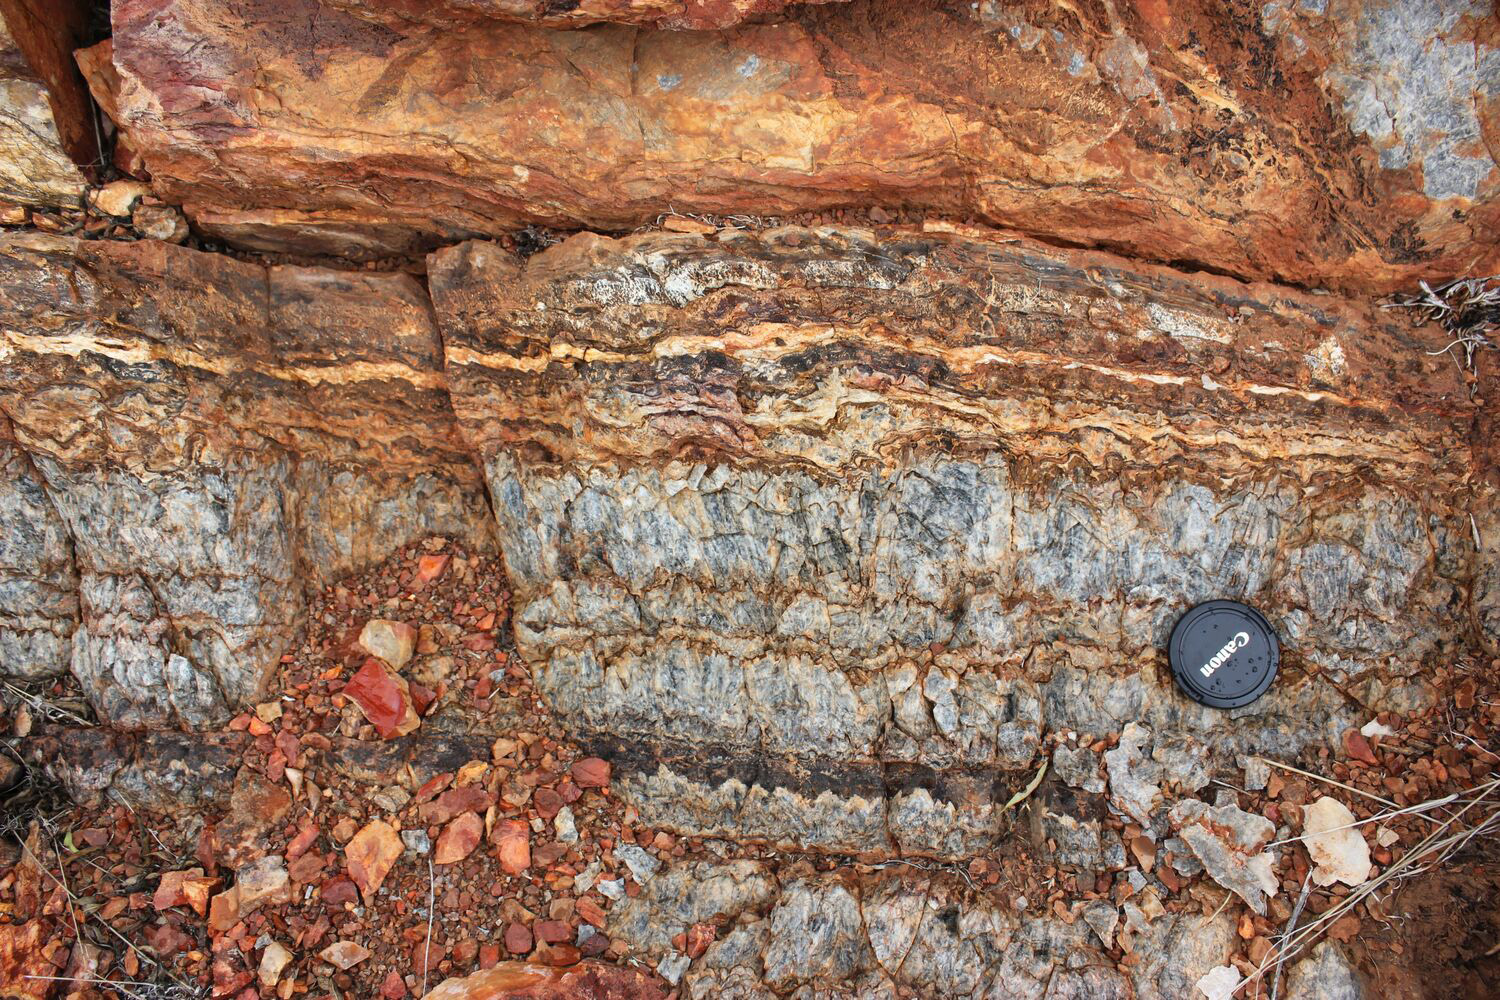 Rocks-of-the-Pilbara-Craton-Exposed-on-the-Surface.jpg